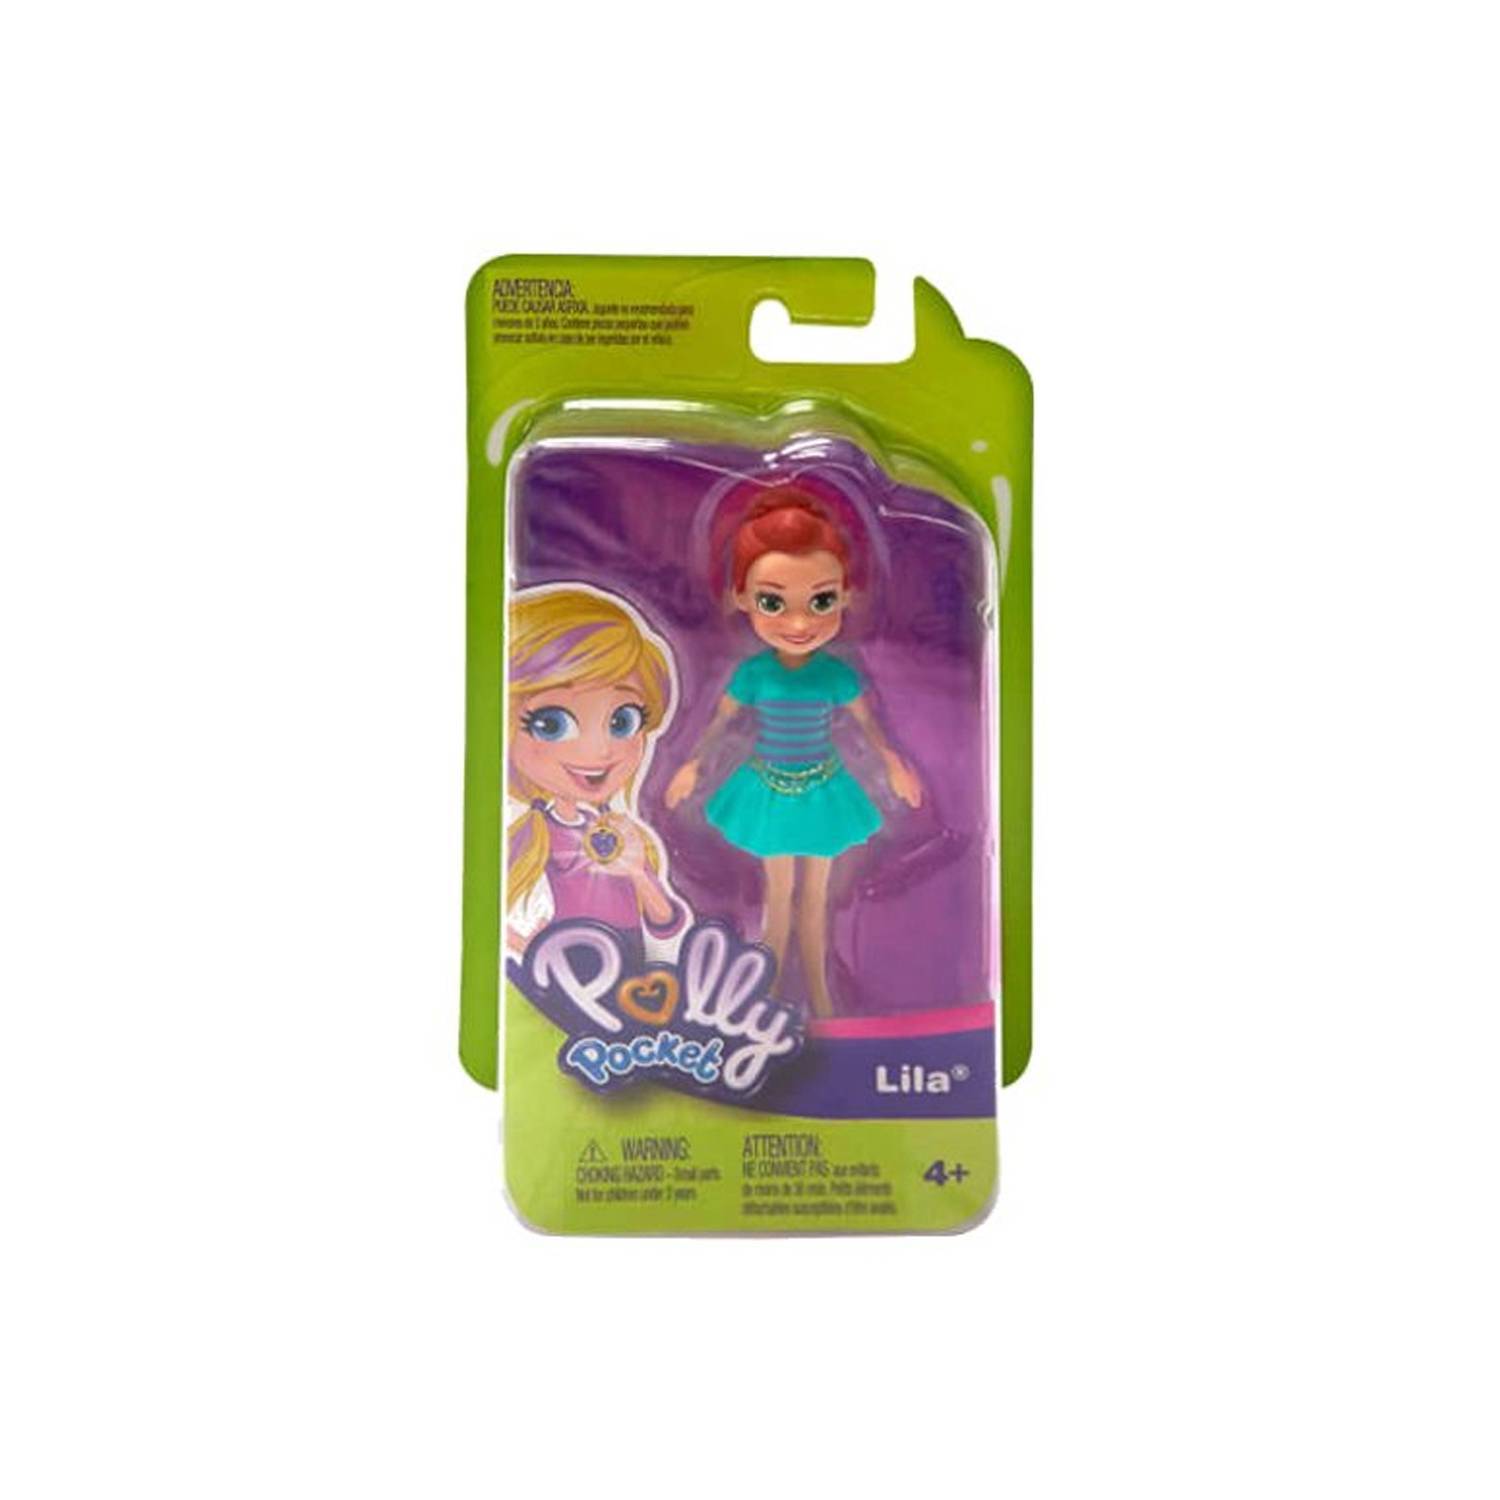 Lila - Amigas da Polly Pocket™ - Mattel™ - Loja da Pupee